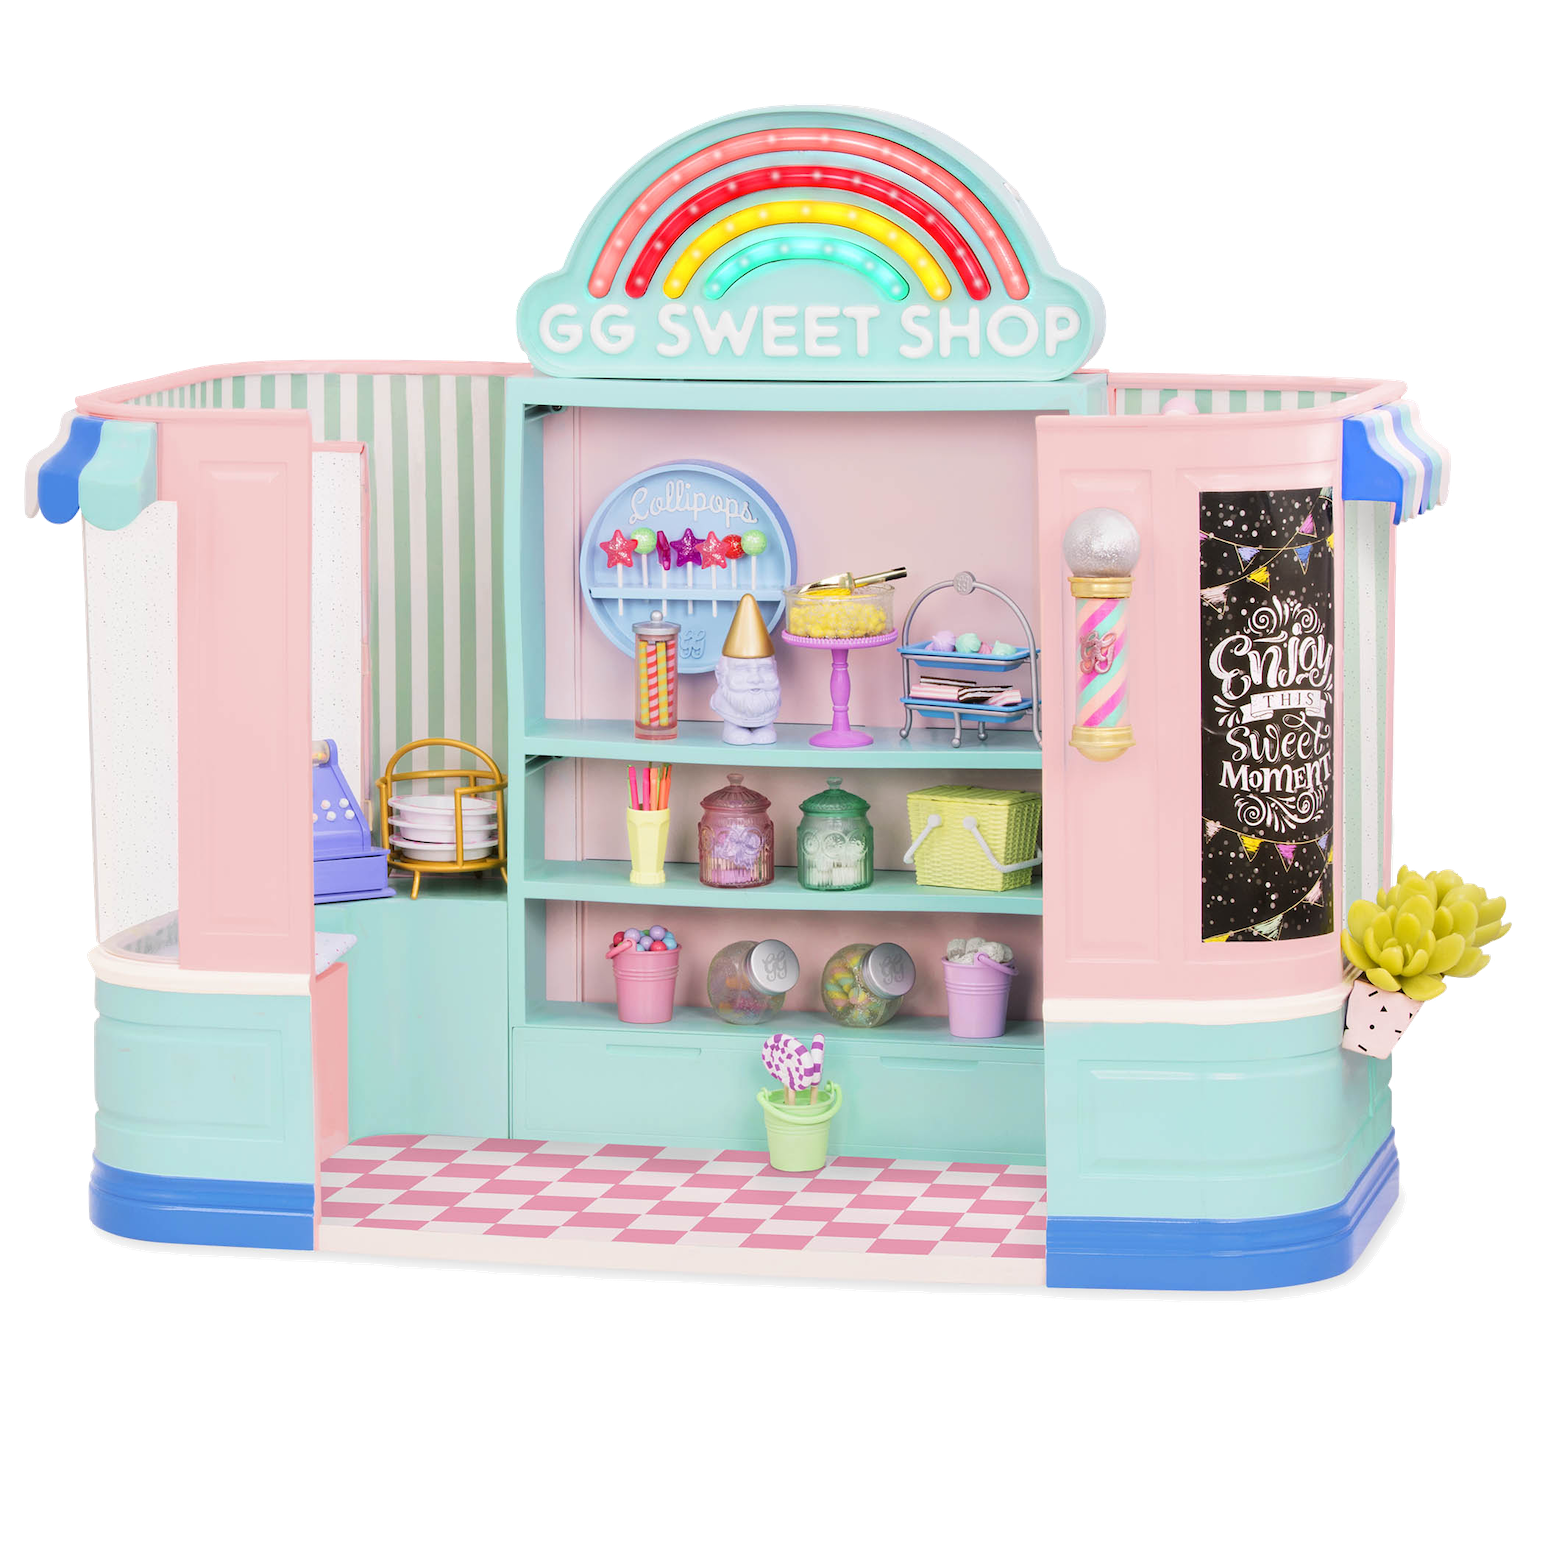 Sweet shop. Sweet shop магазин. Candy shop игрушка. Sweet Kids игрушка. Gg Sweet shop.